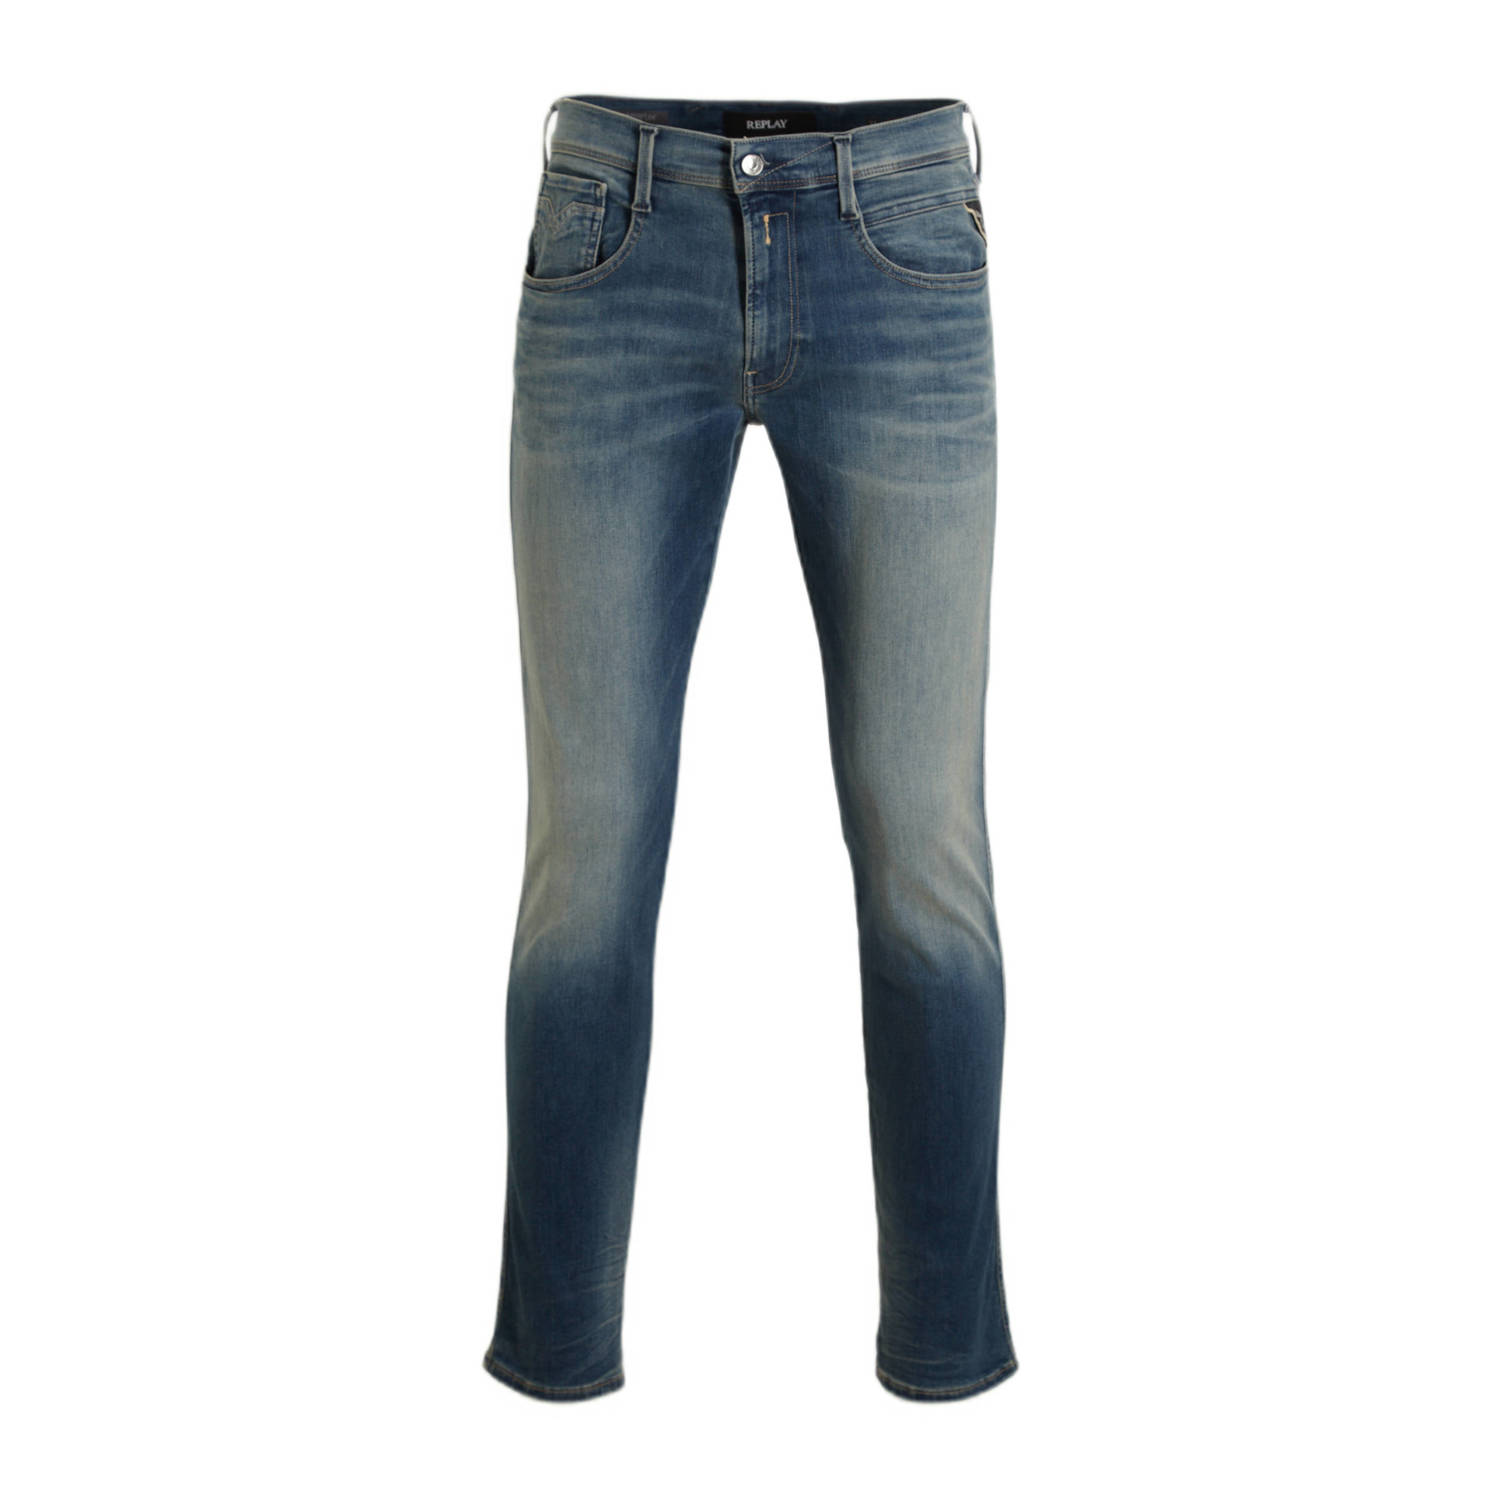 REPLAY slim fit jeans ANBASS medium blue